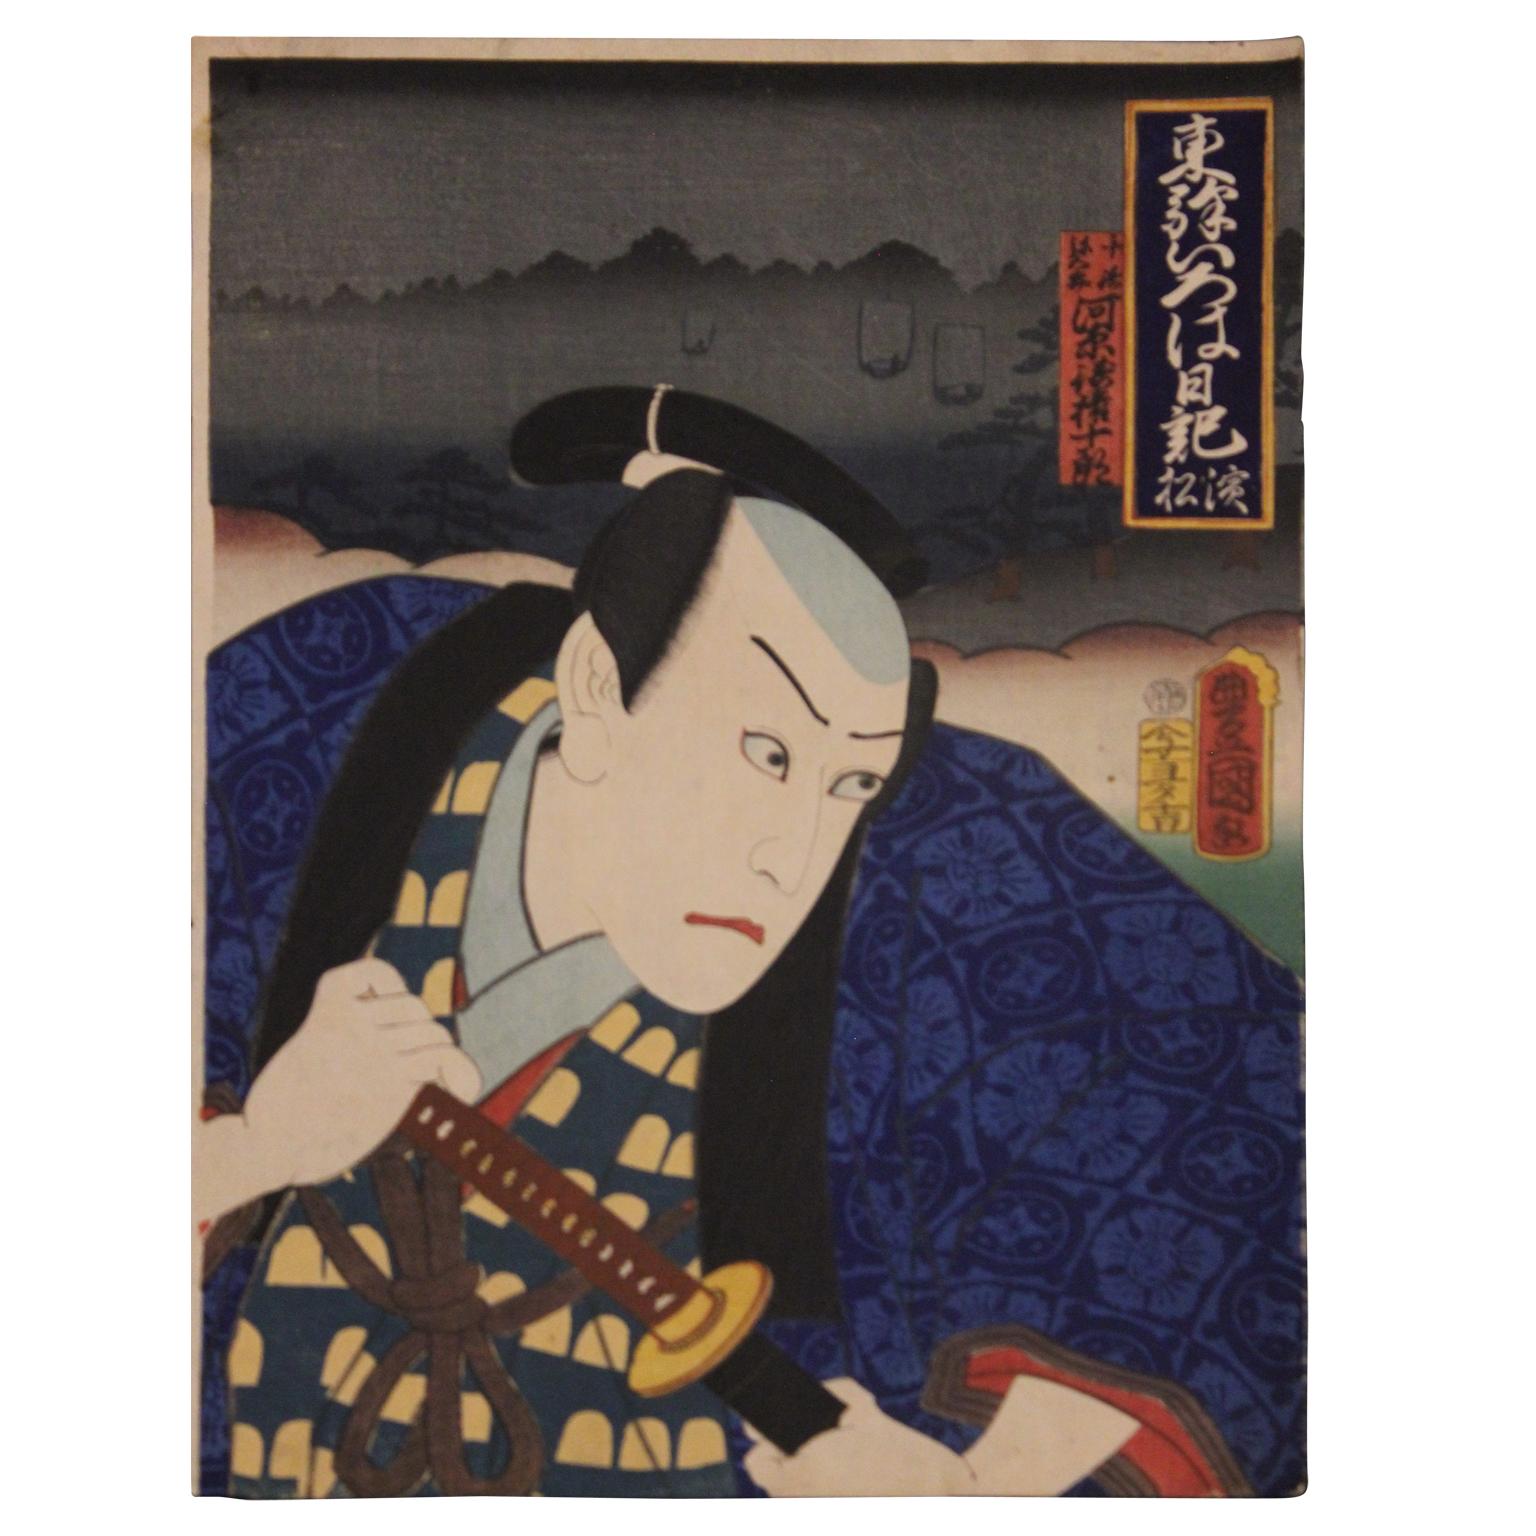 Utagawa Kunisada (Toyokuni III) Portrait Print - Kabuki Samari Actor Woodblock Japanese Print 